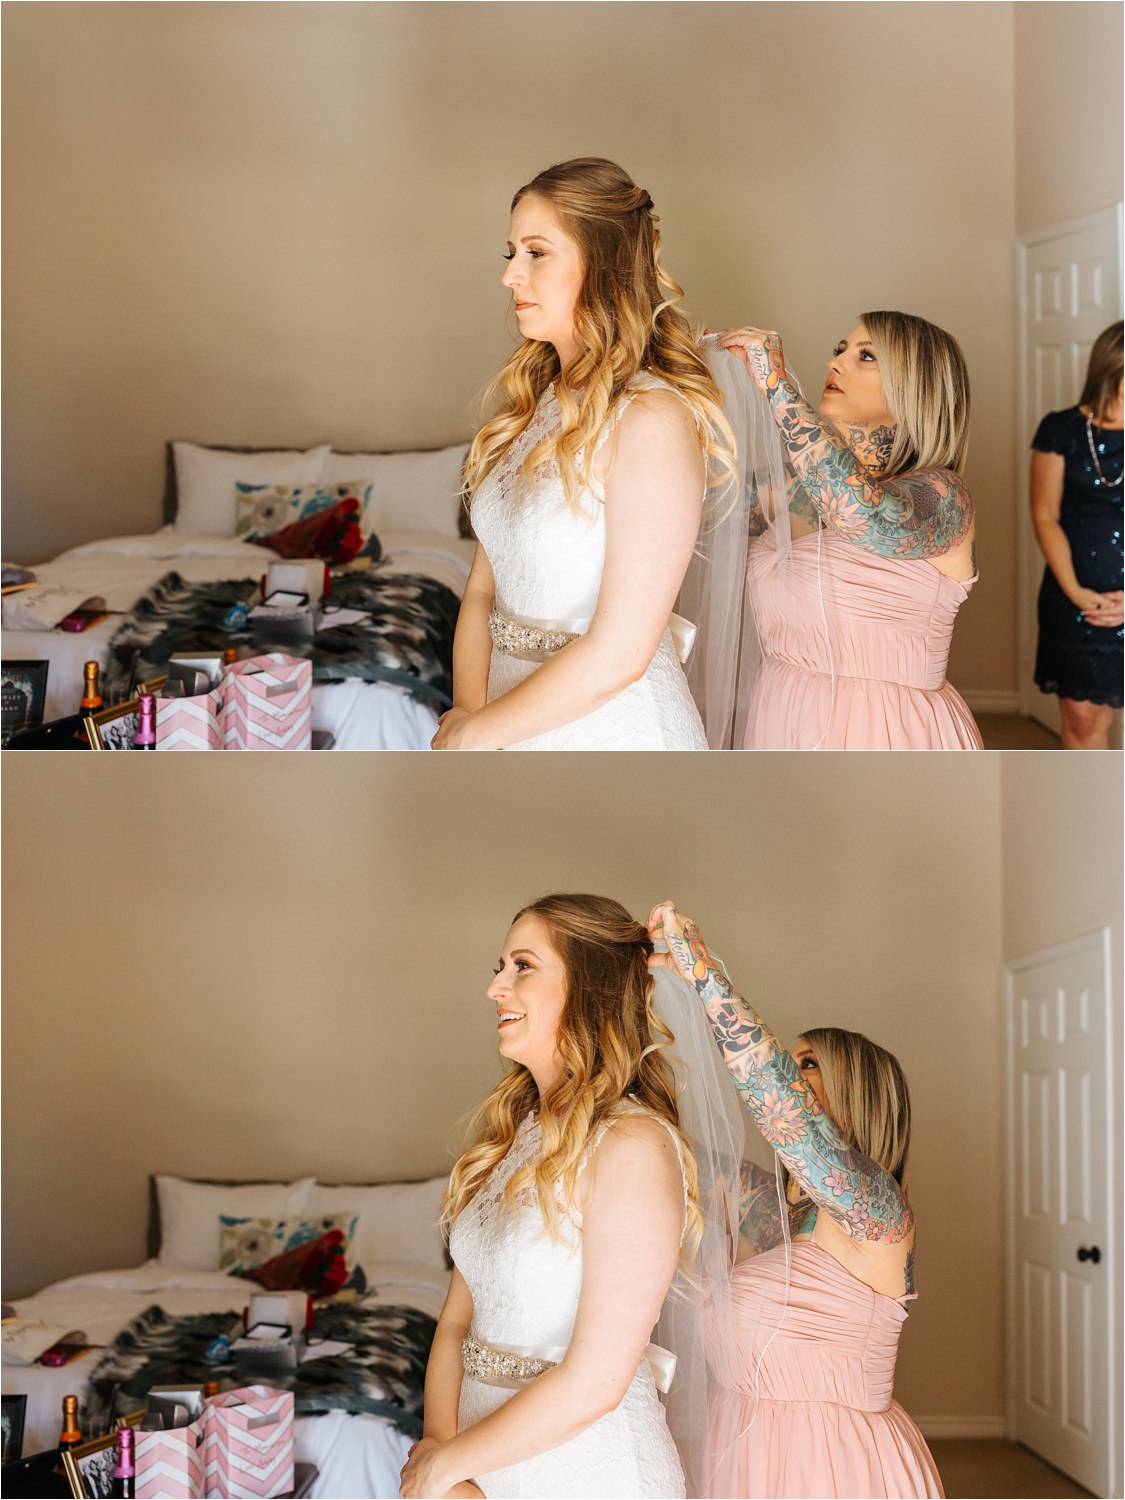 Bride's Best Friend putting on her veil - https://brittneyhannonphotography.com